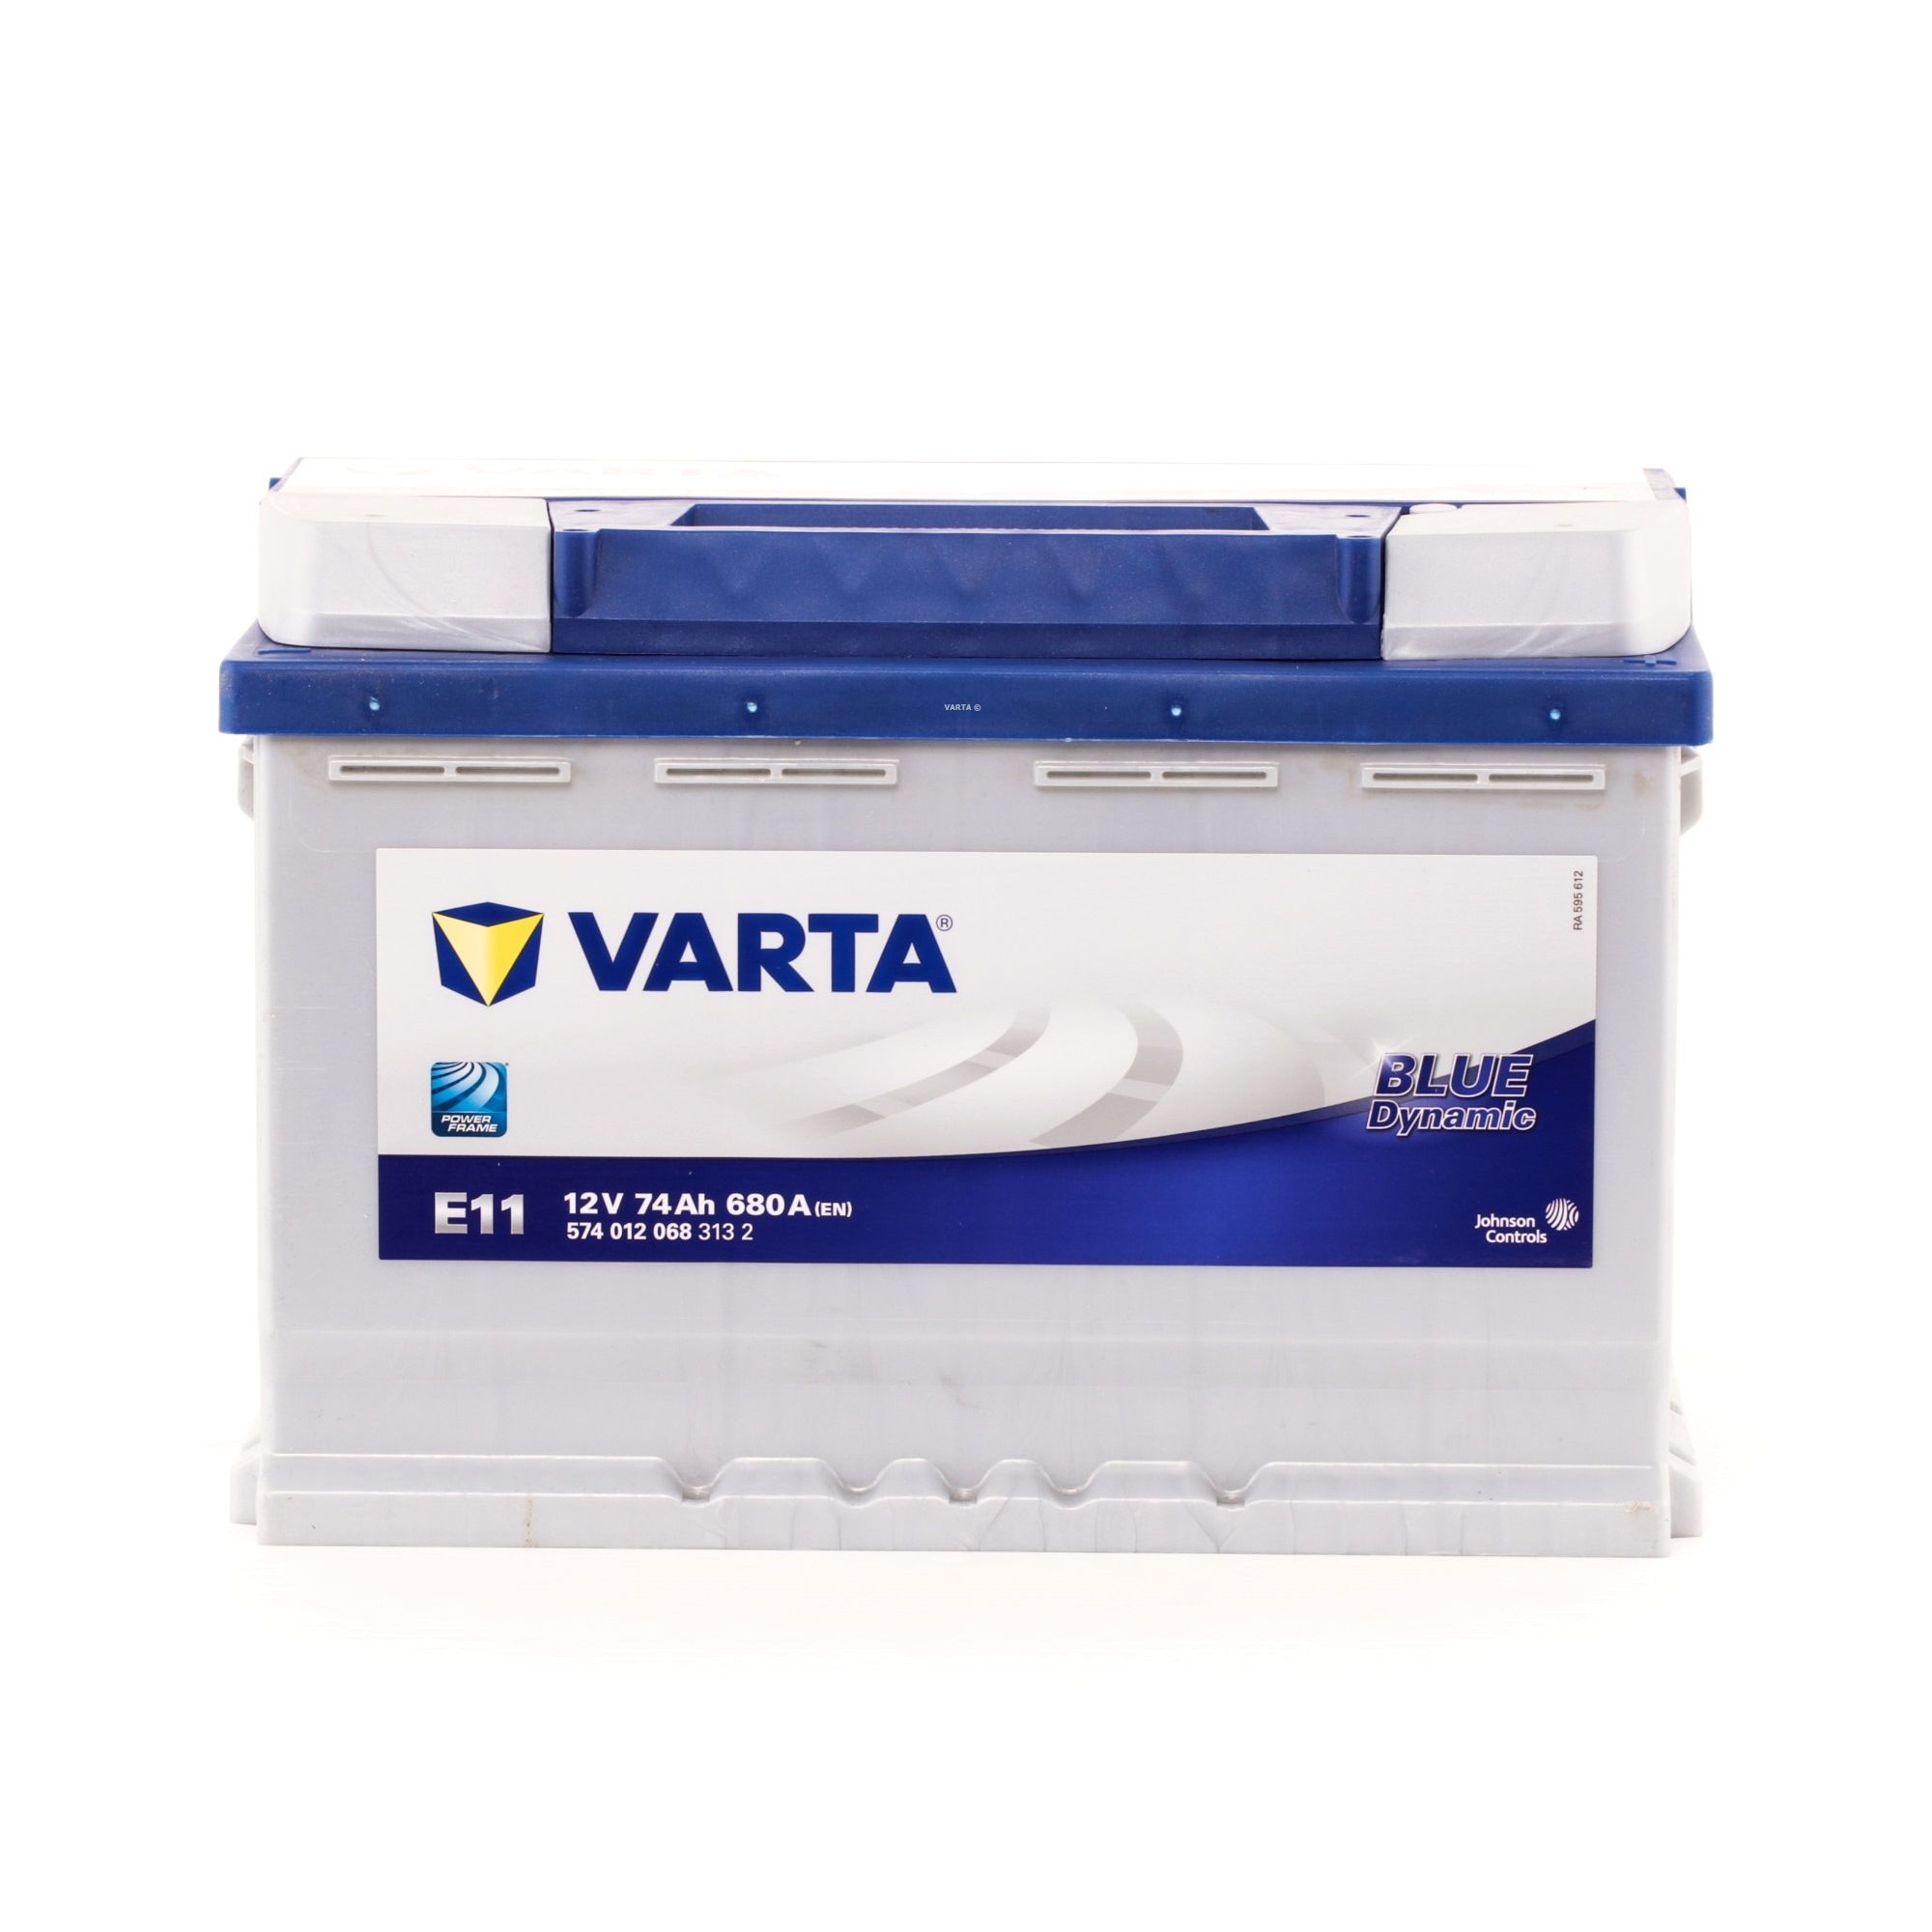 VARTA 5740120683132 Batterie günstig in Online Shop